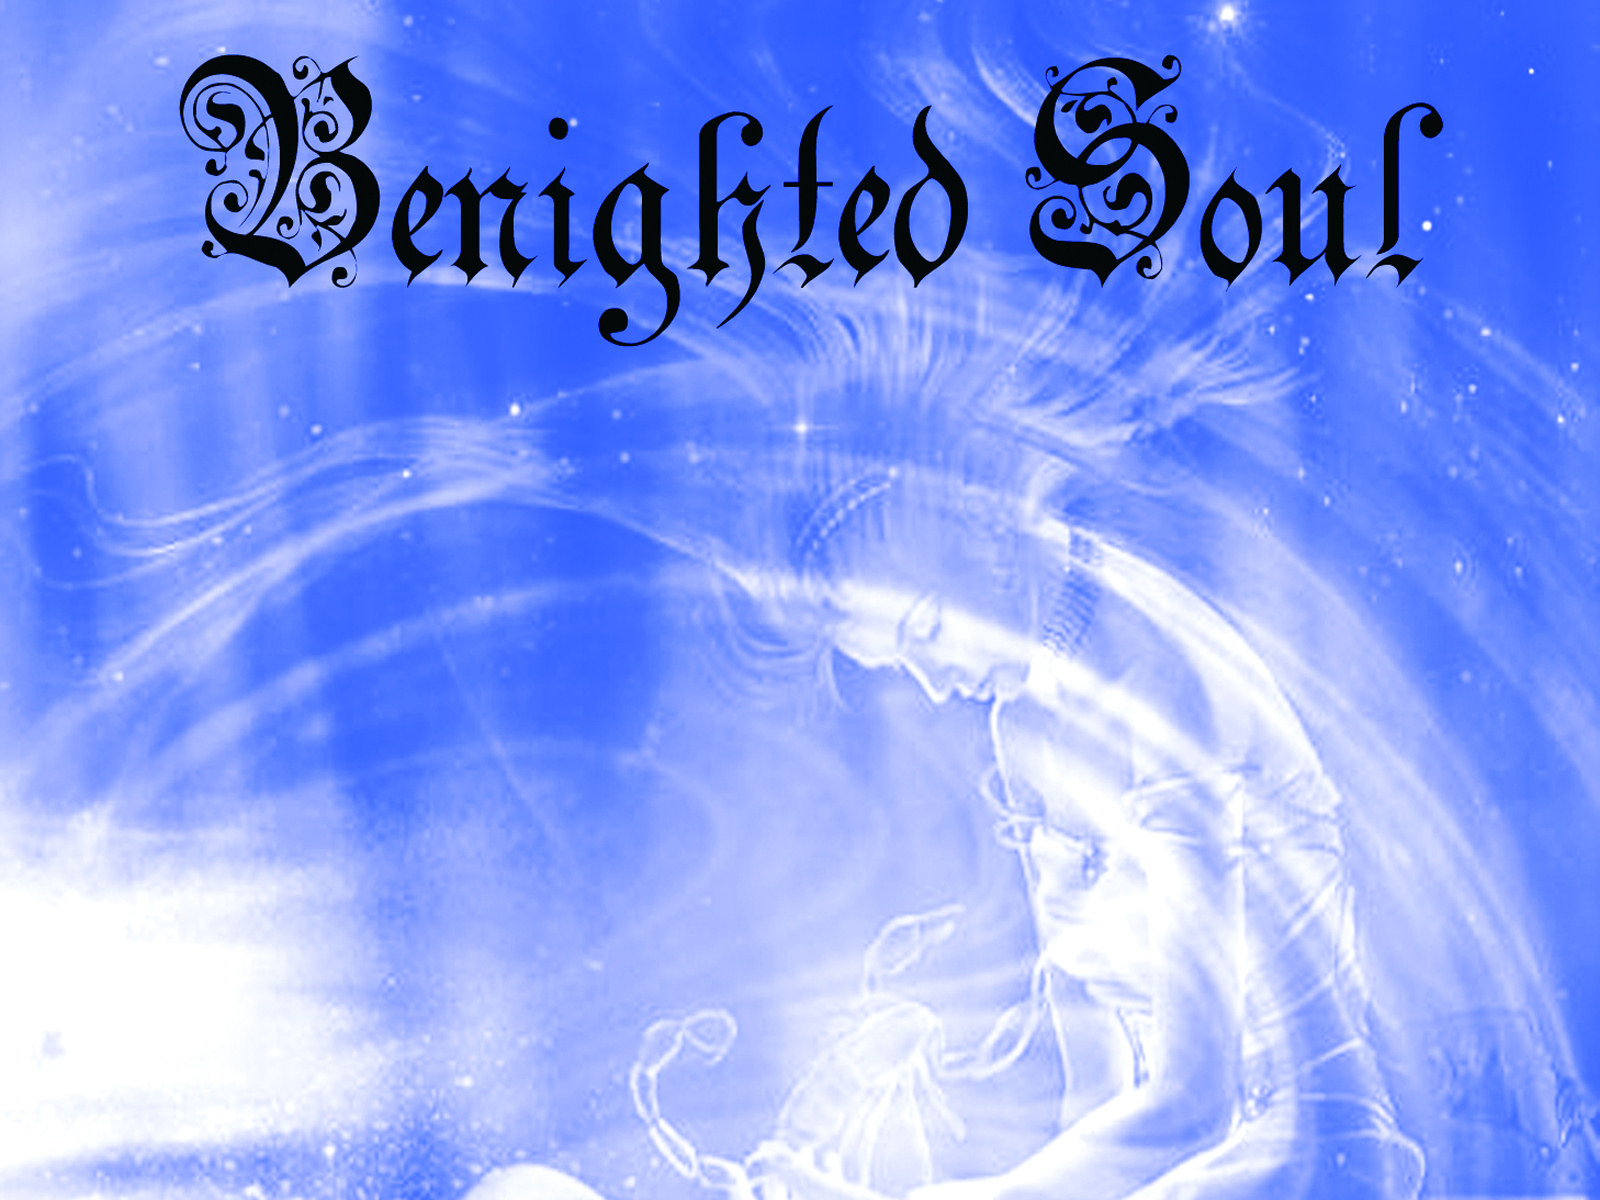 Benighted_Soul_06_1600x1200.jpg